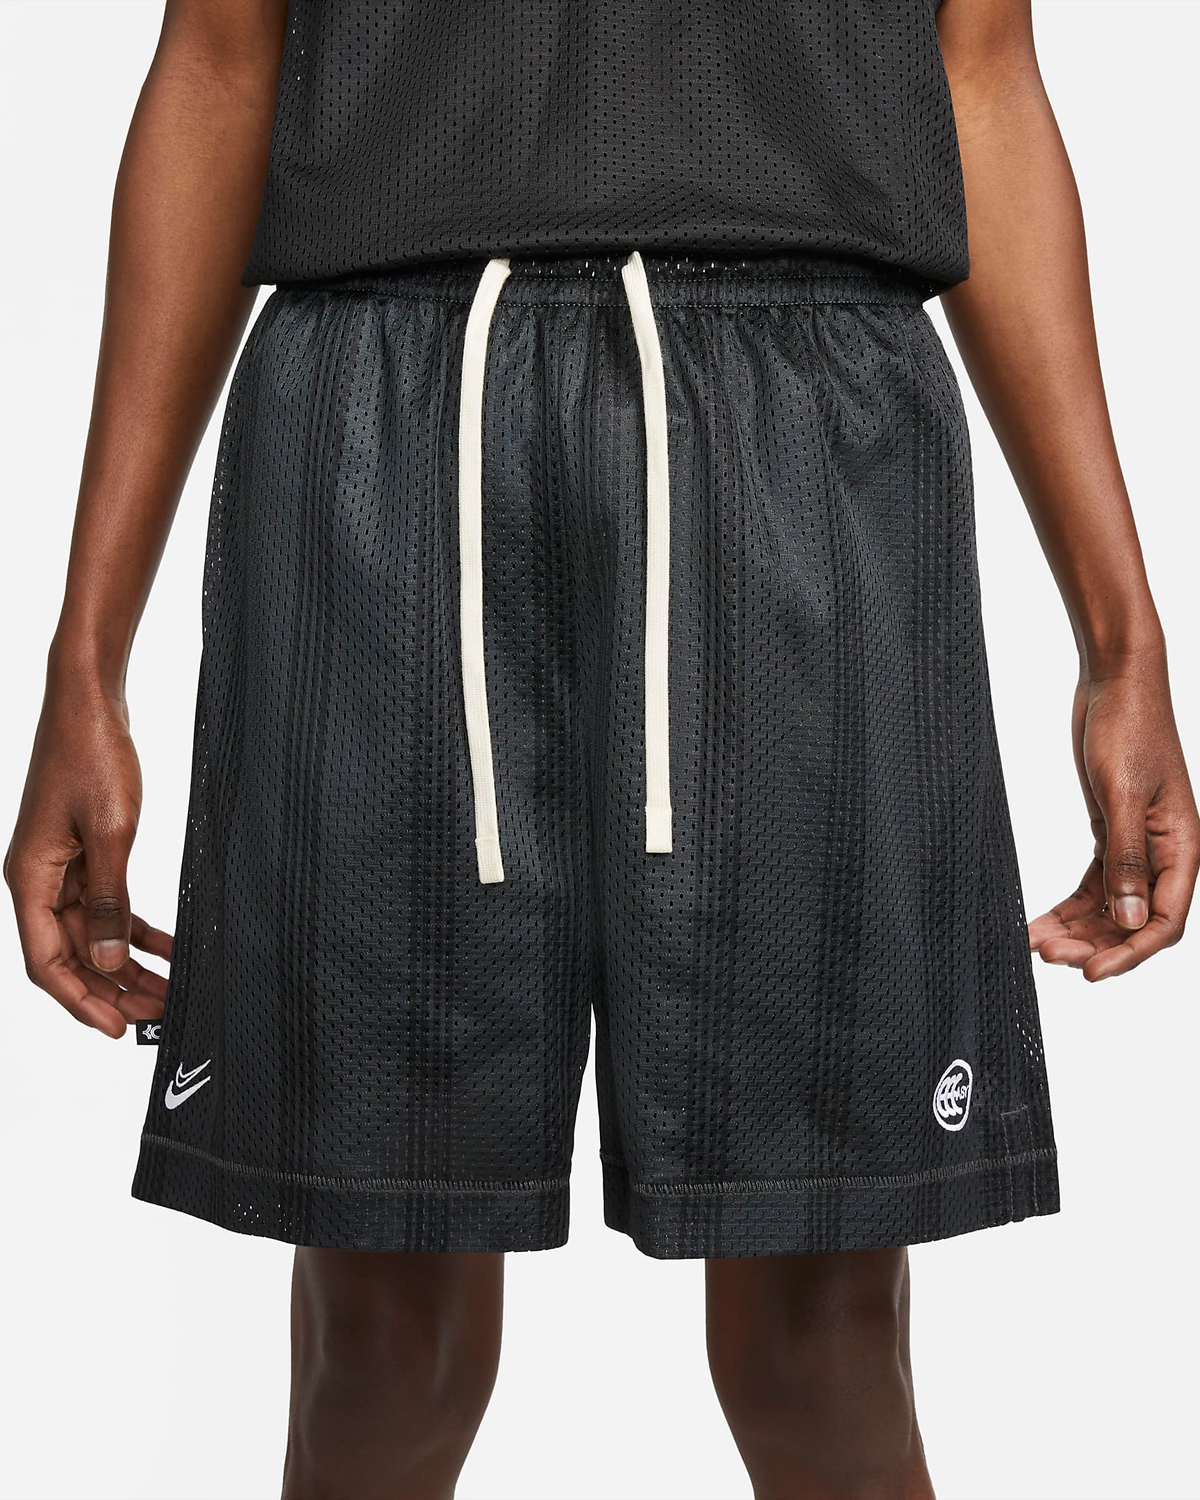 Nike-KD-Kevin-Durant-Mesh-Basketball-Shorts-Black-1